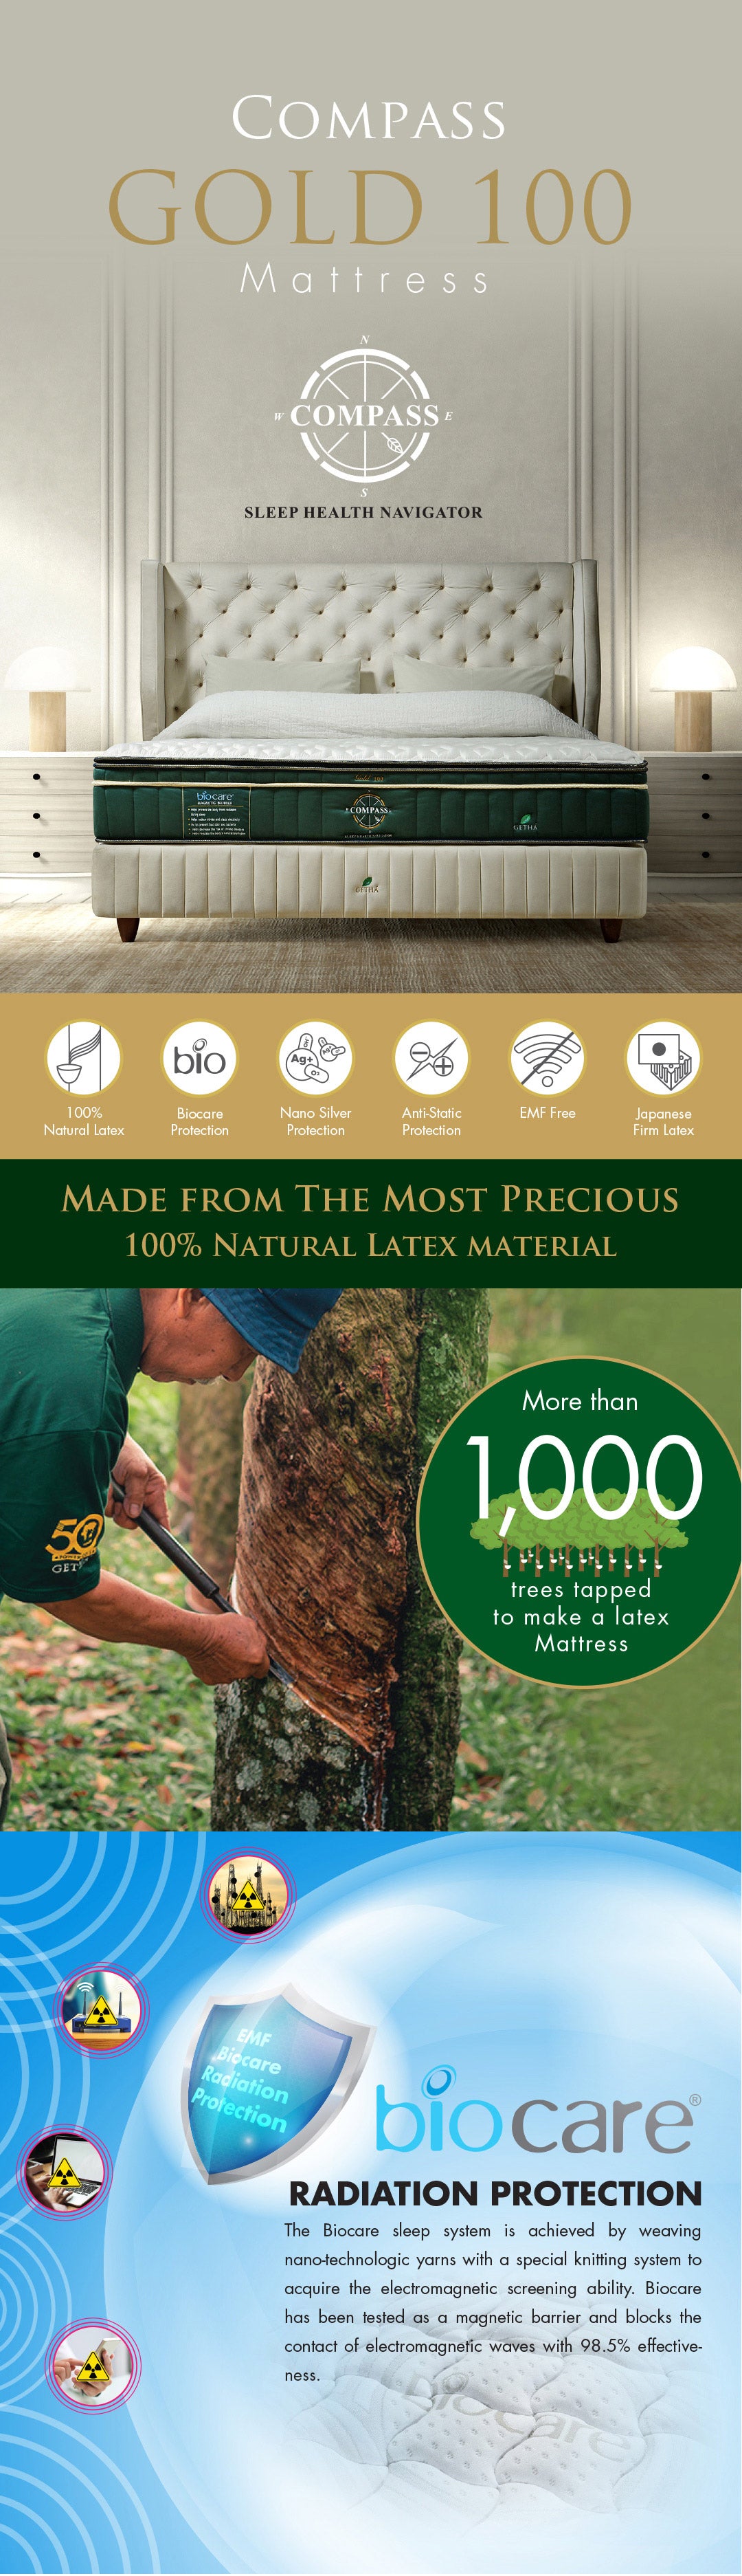 compass-gold-100-mattress-product-description